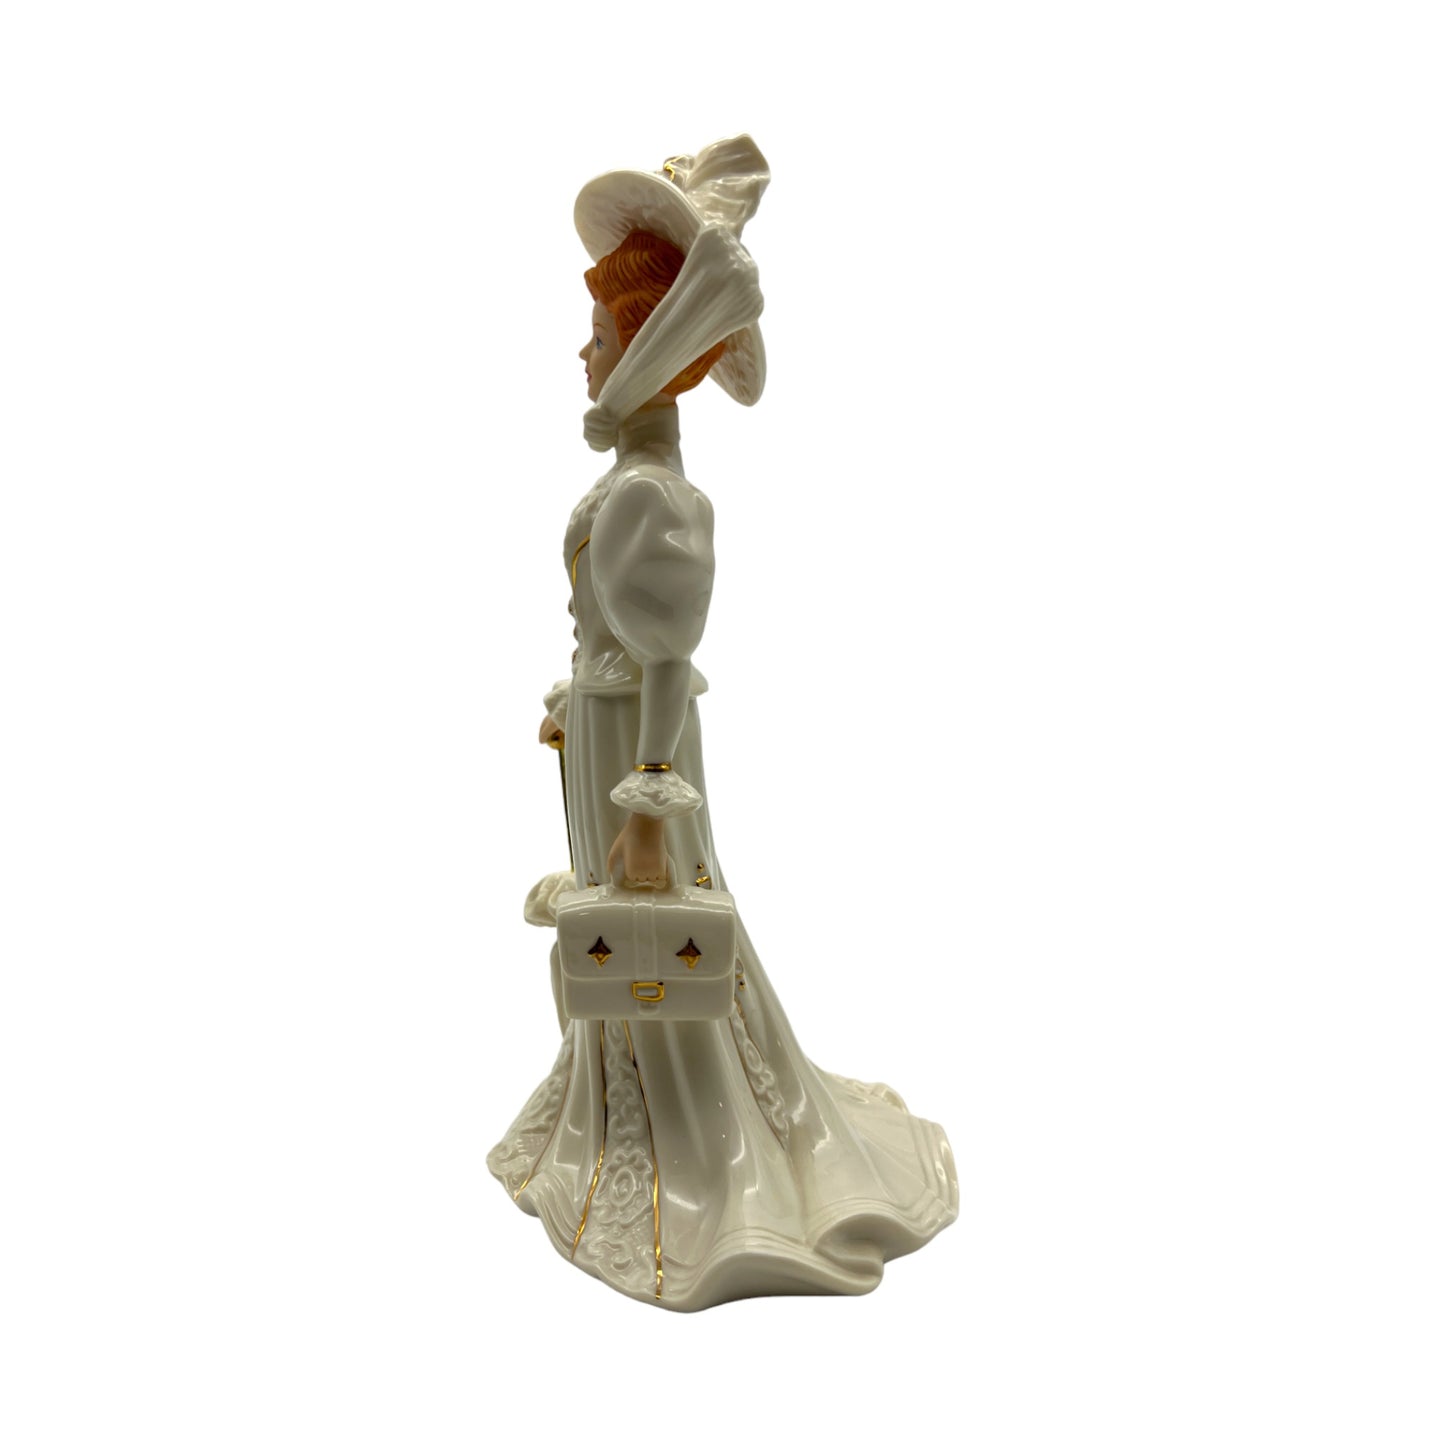 Lenox - Grand Voyage - 1995 Ivory Classic Figurine - Limited Edition - Original Box - 9.25"